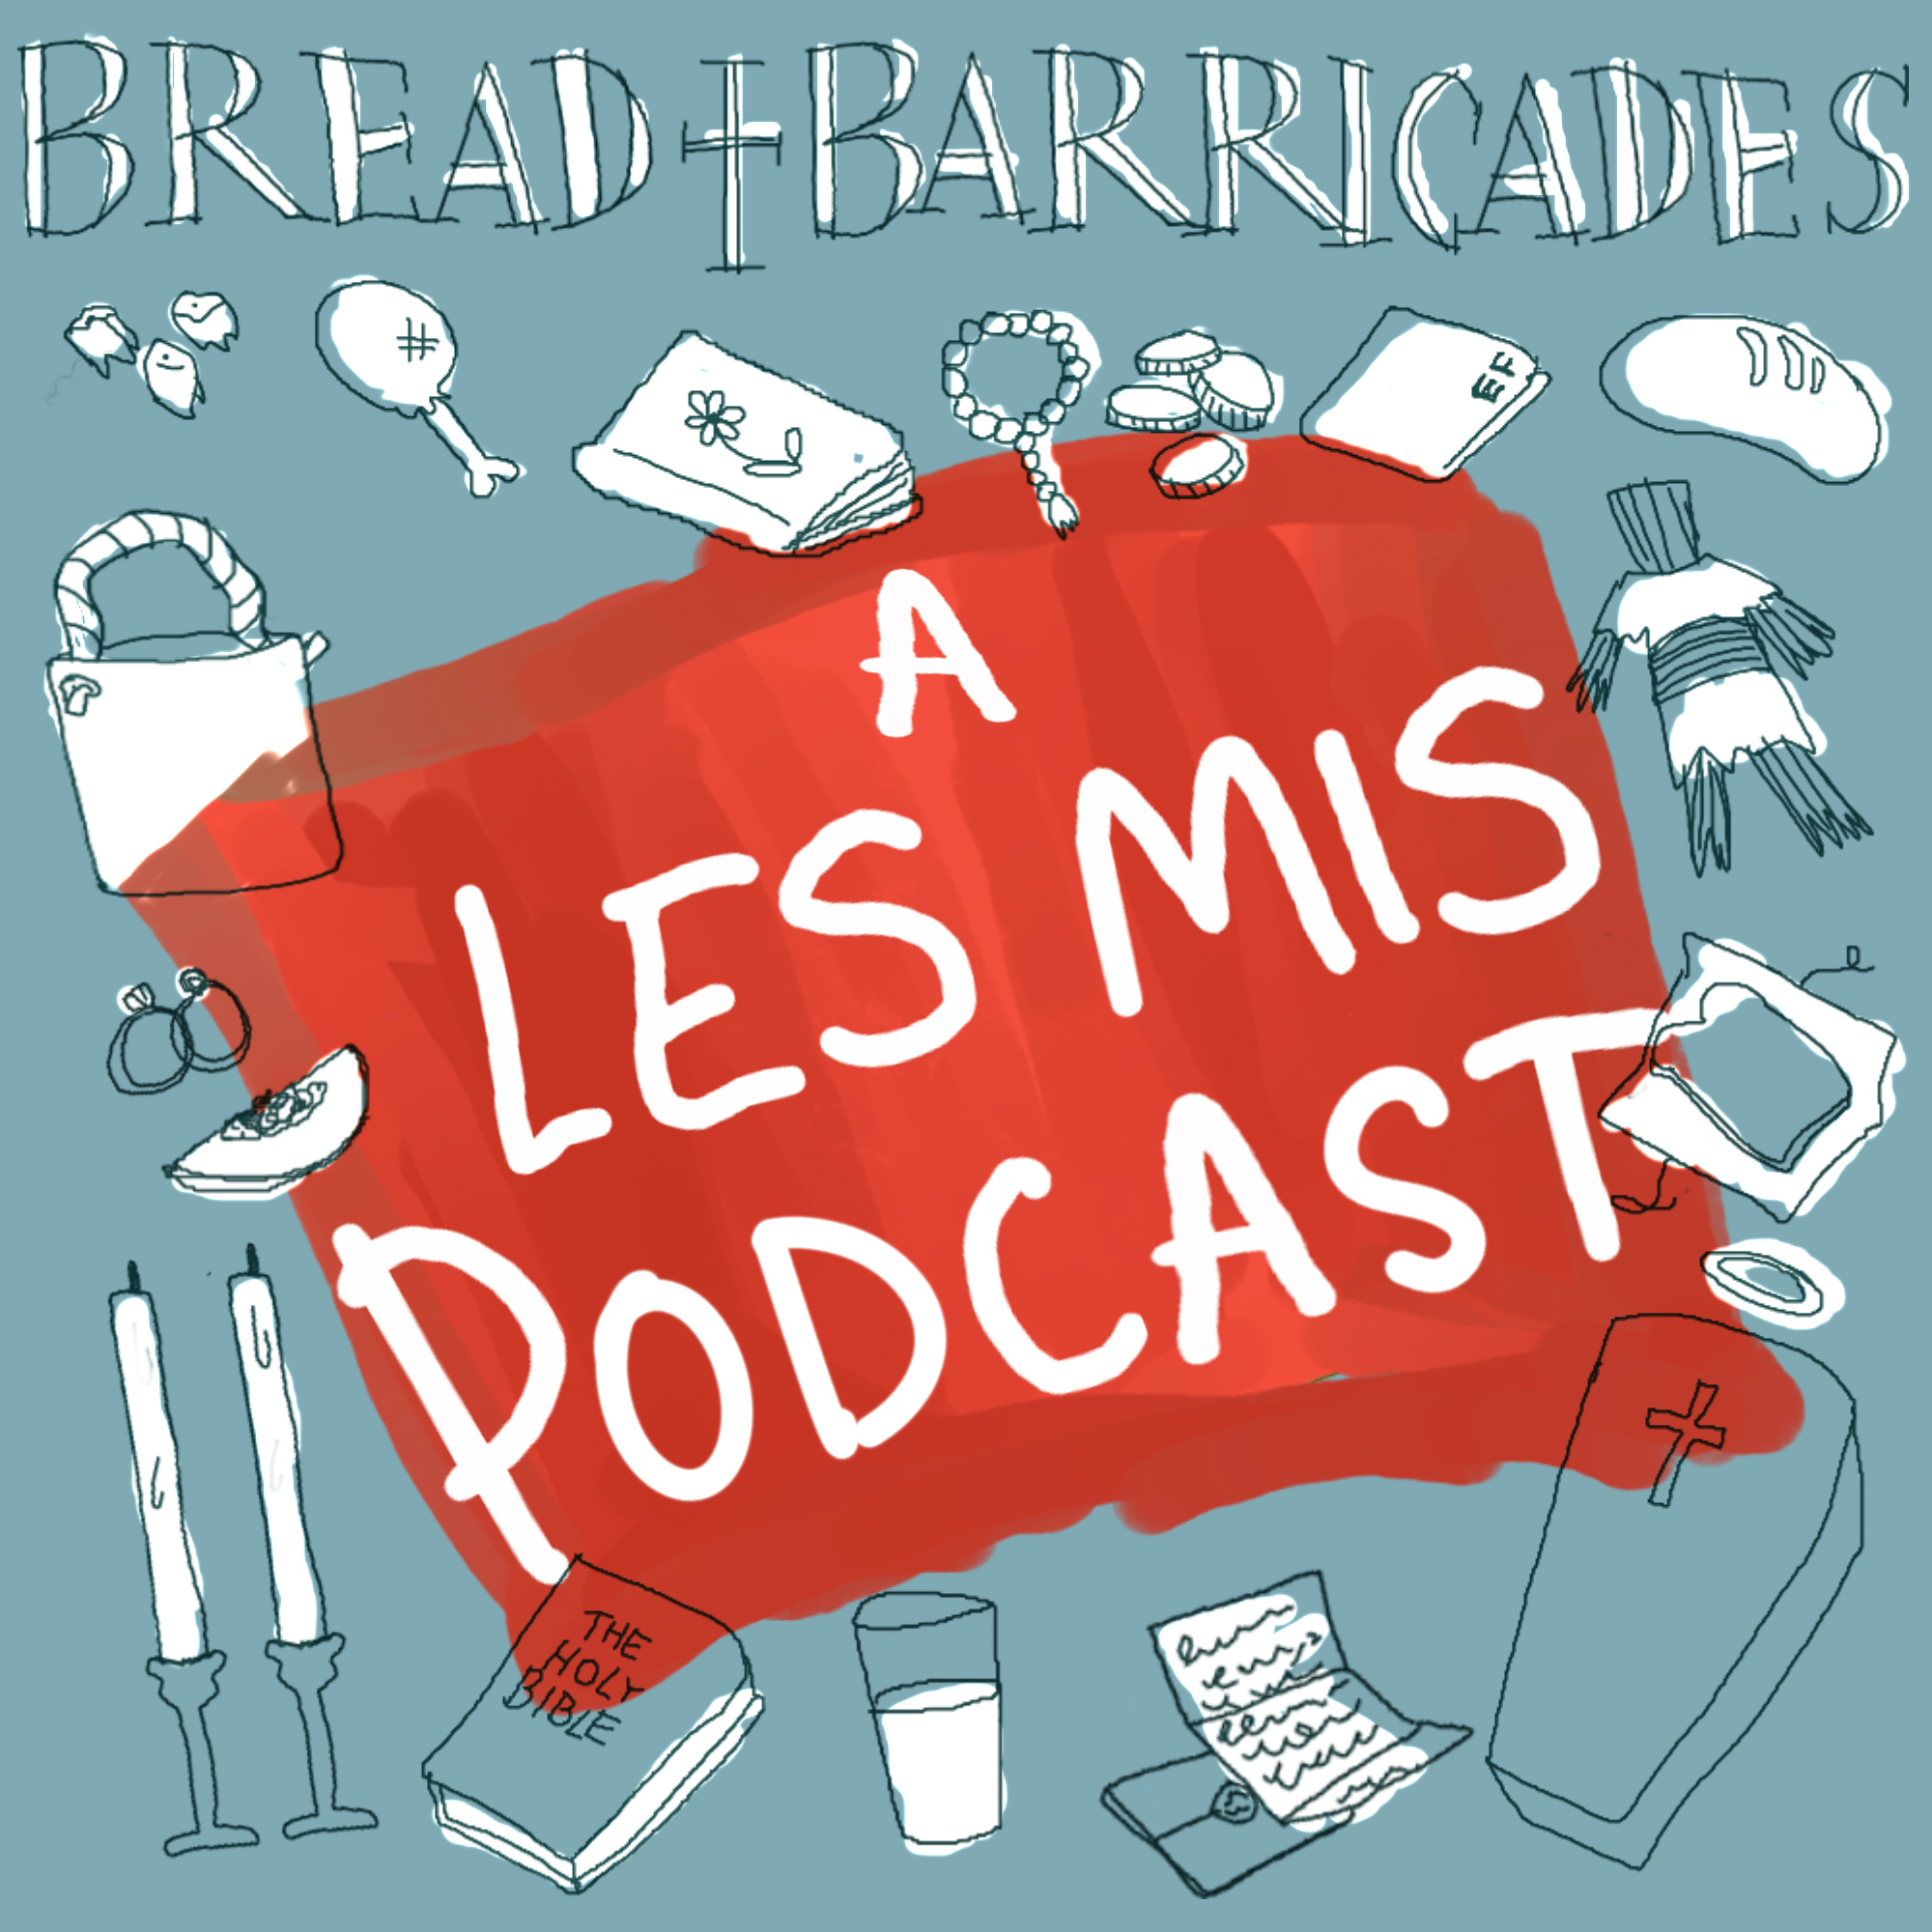 Bread & Barricades: SPECIAL, Les Misérables (2012 film)